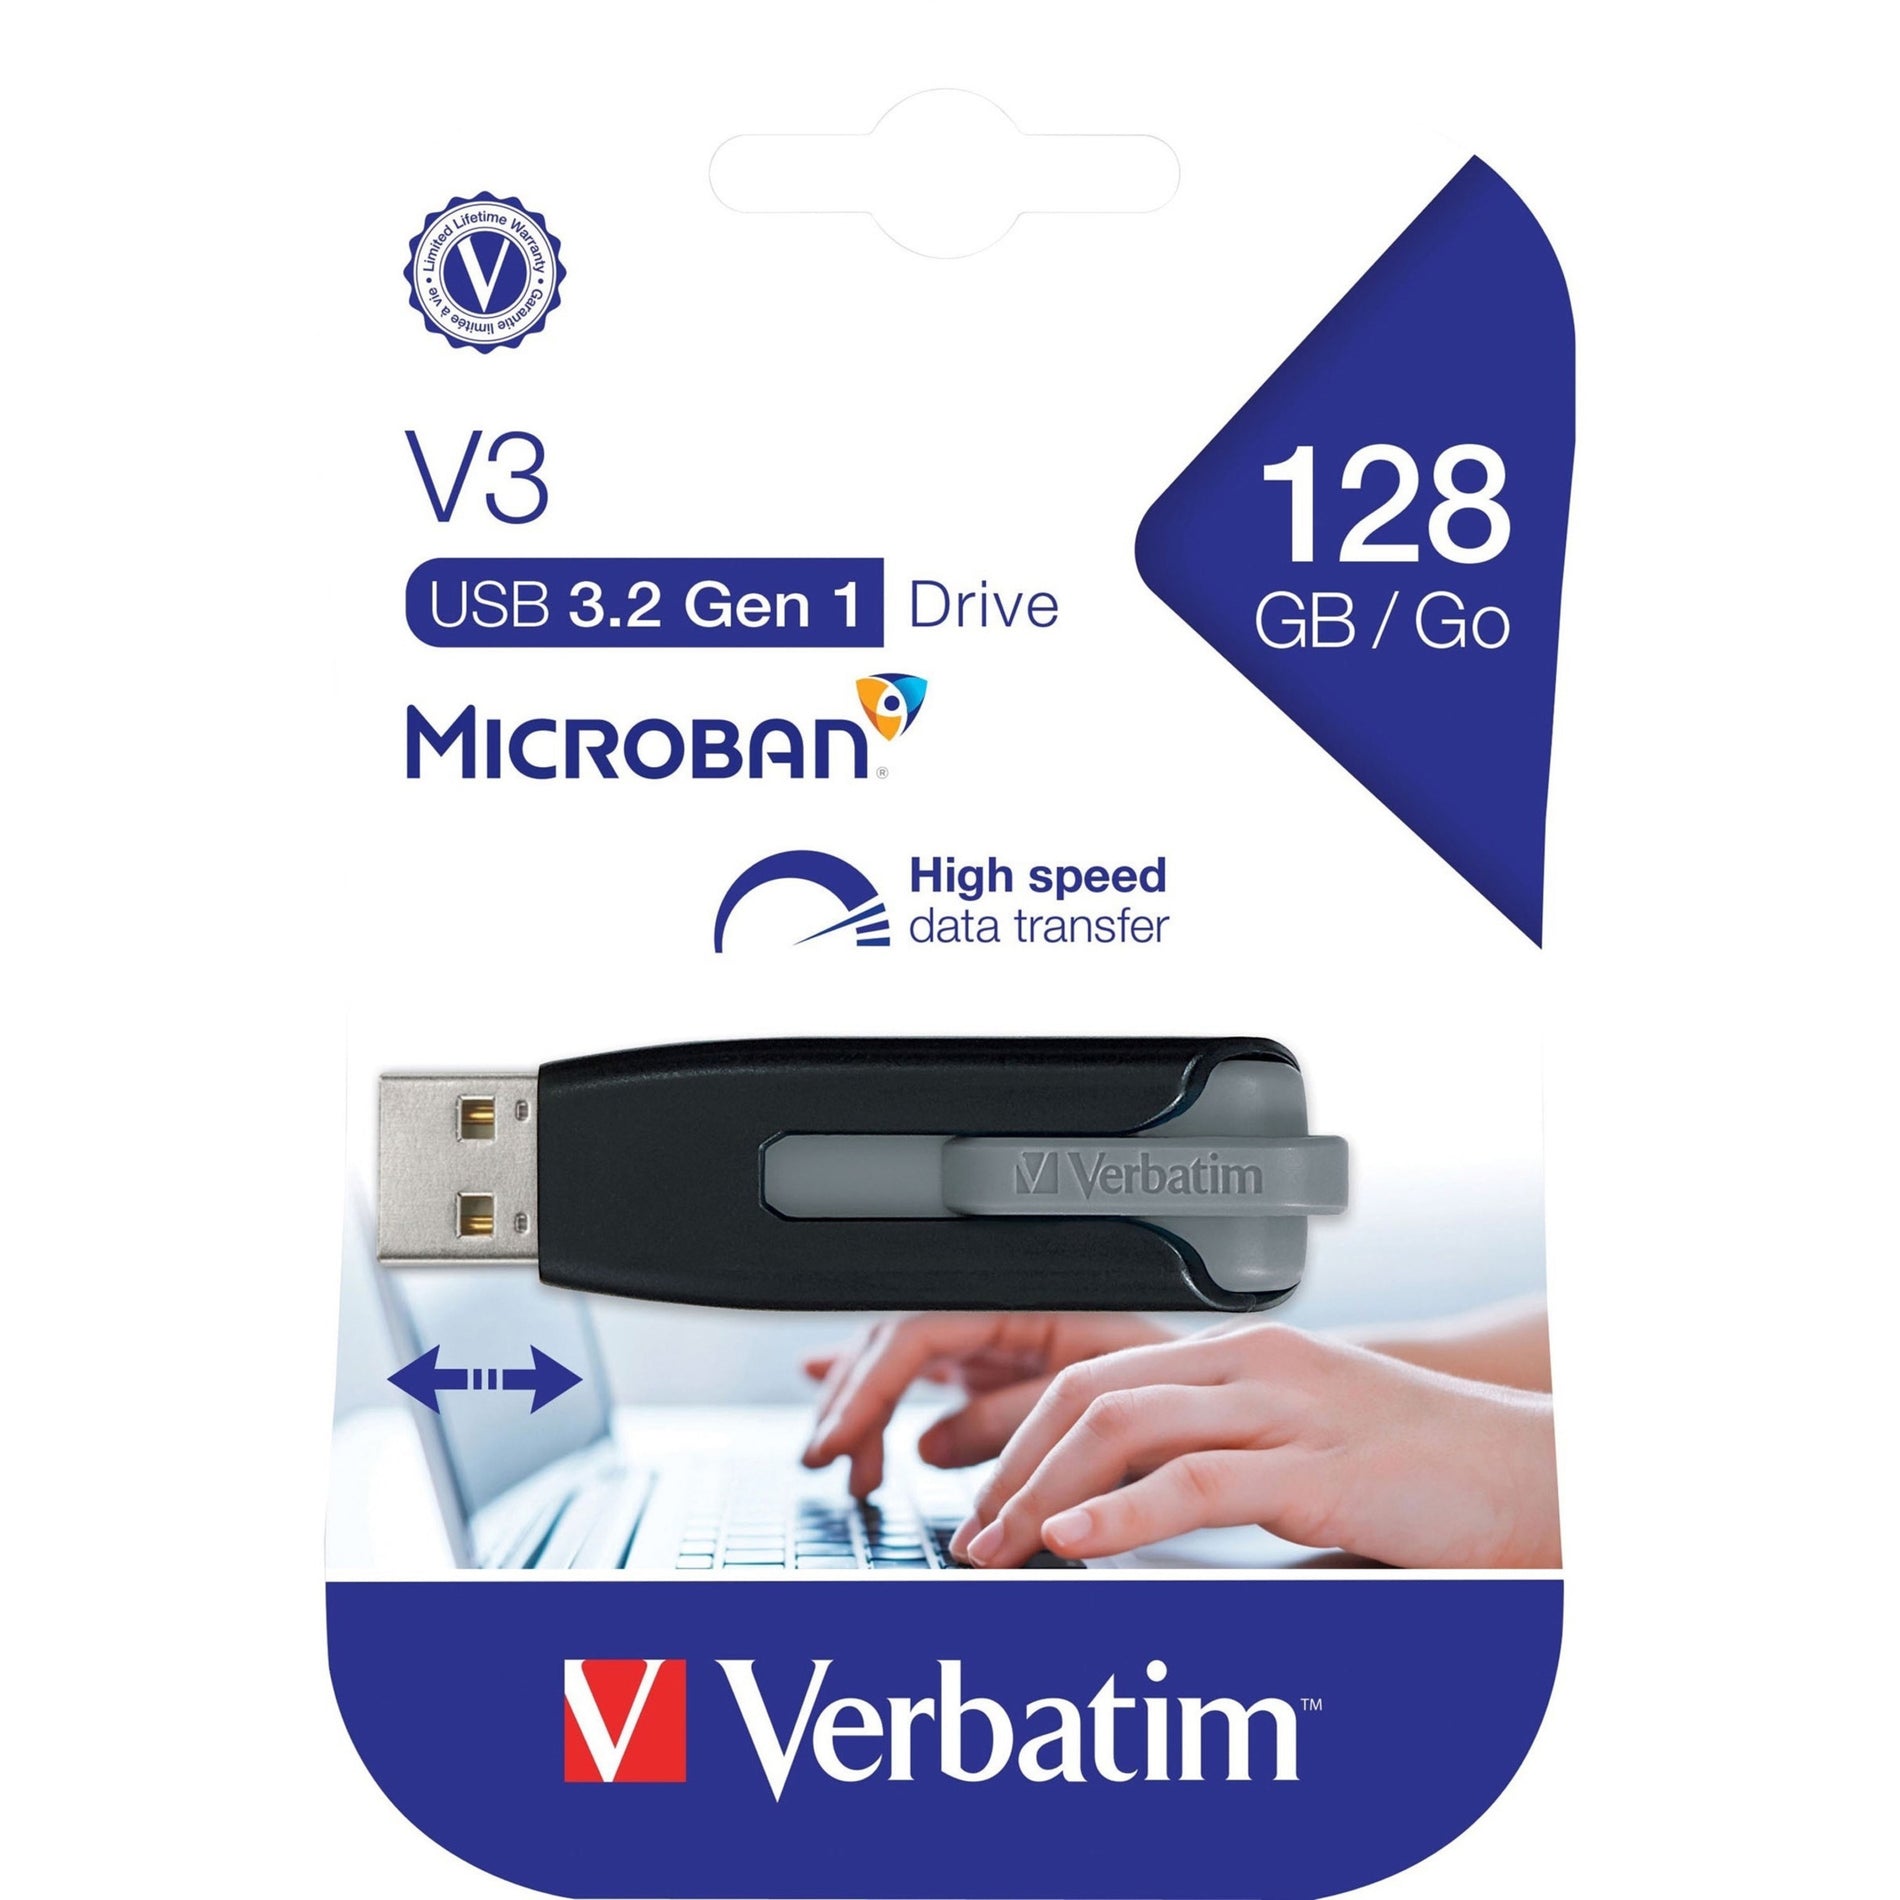 Microban 49189 Store 'n' Go V3 USB Drive 125GB Gray 迈克班 49189 存储 'n' Go V3 USB 闪存盘 125GB 灰色